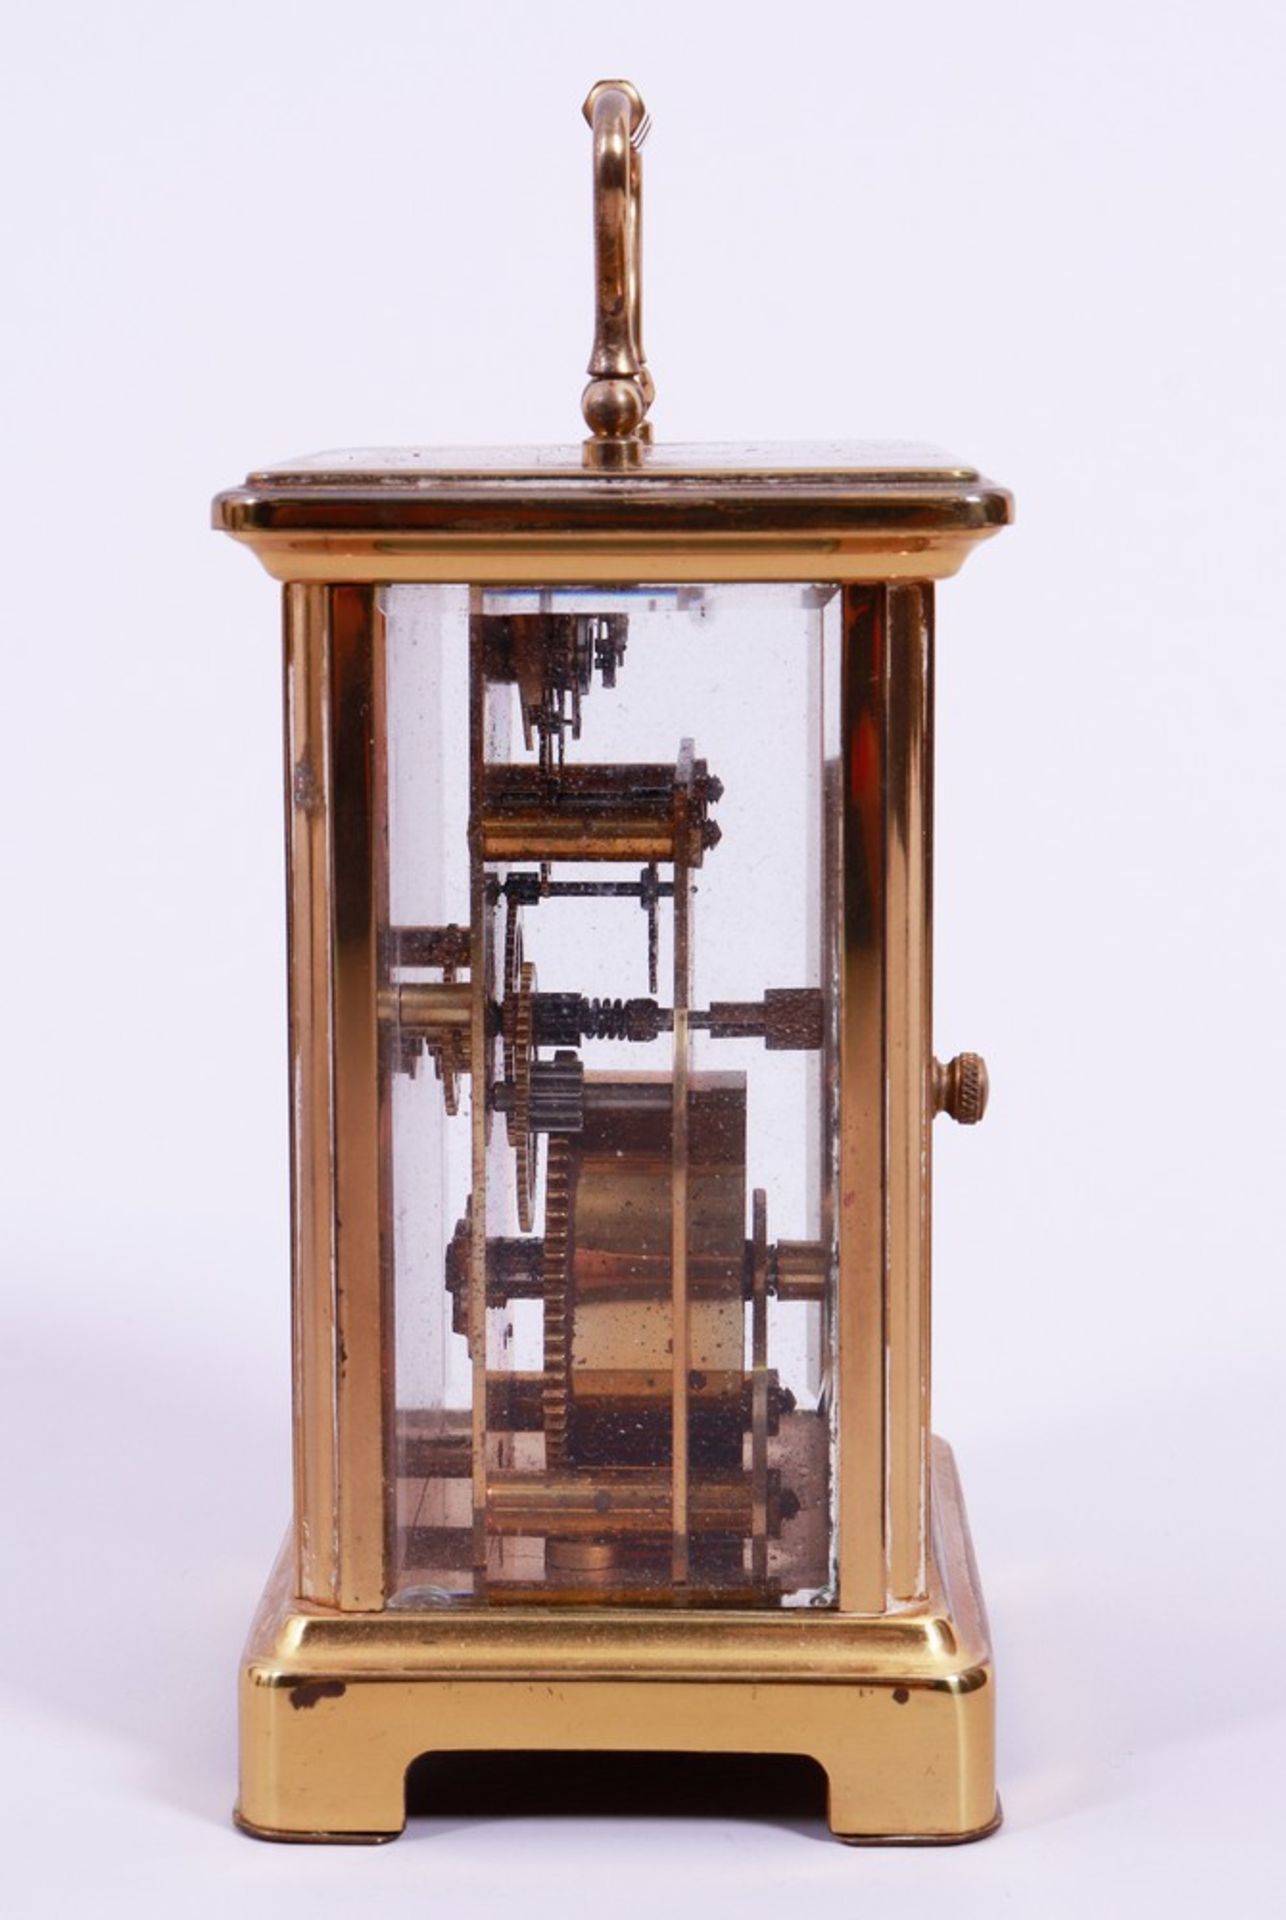 Small carriage clock, Duverdrey & Bloquel Bayard, France, c. 1900/20 - Image 3 of 8